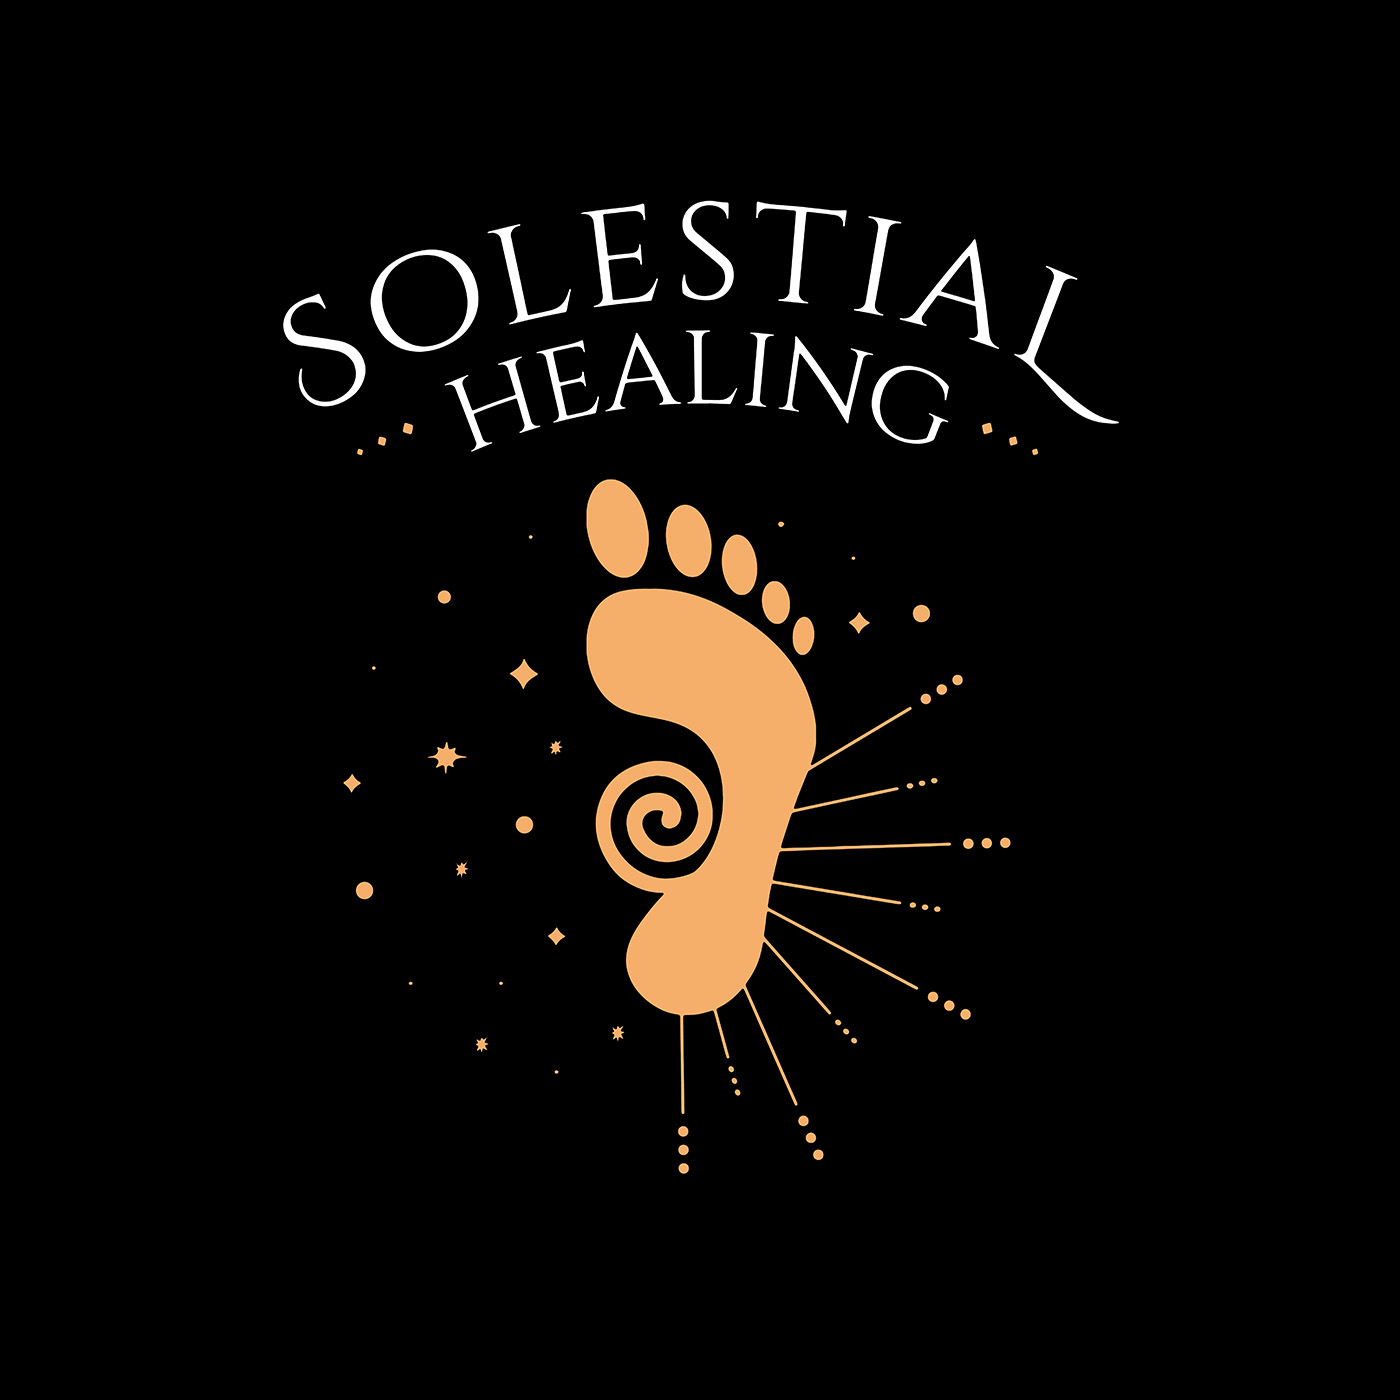 Solestial Healing